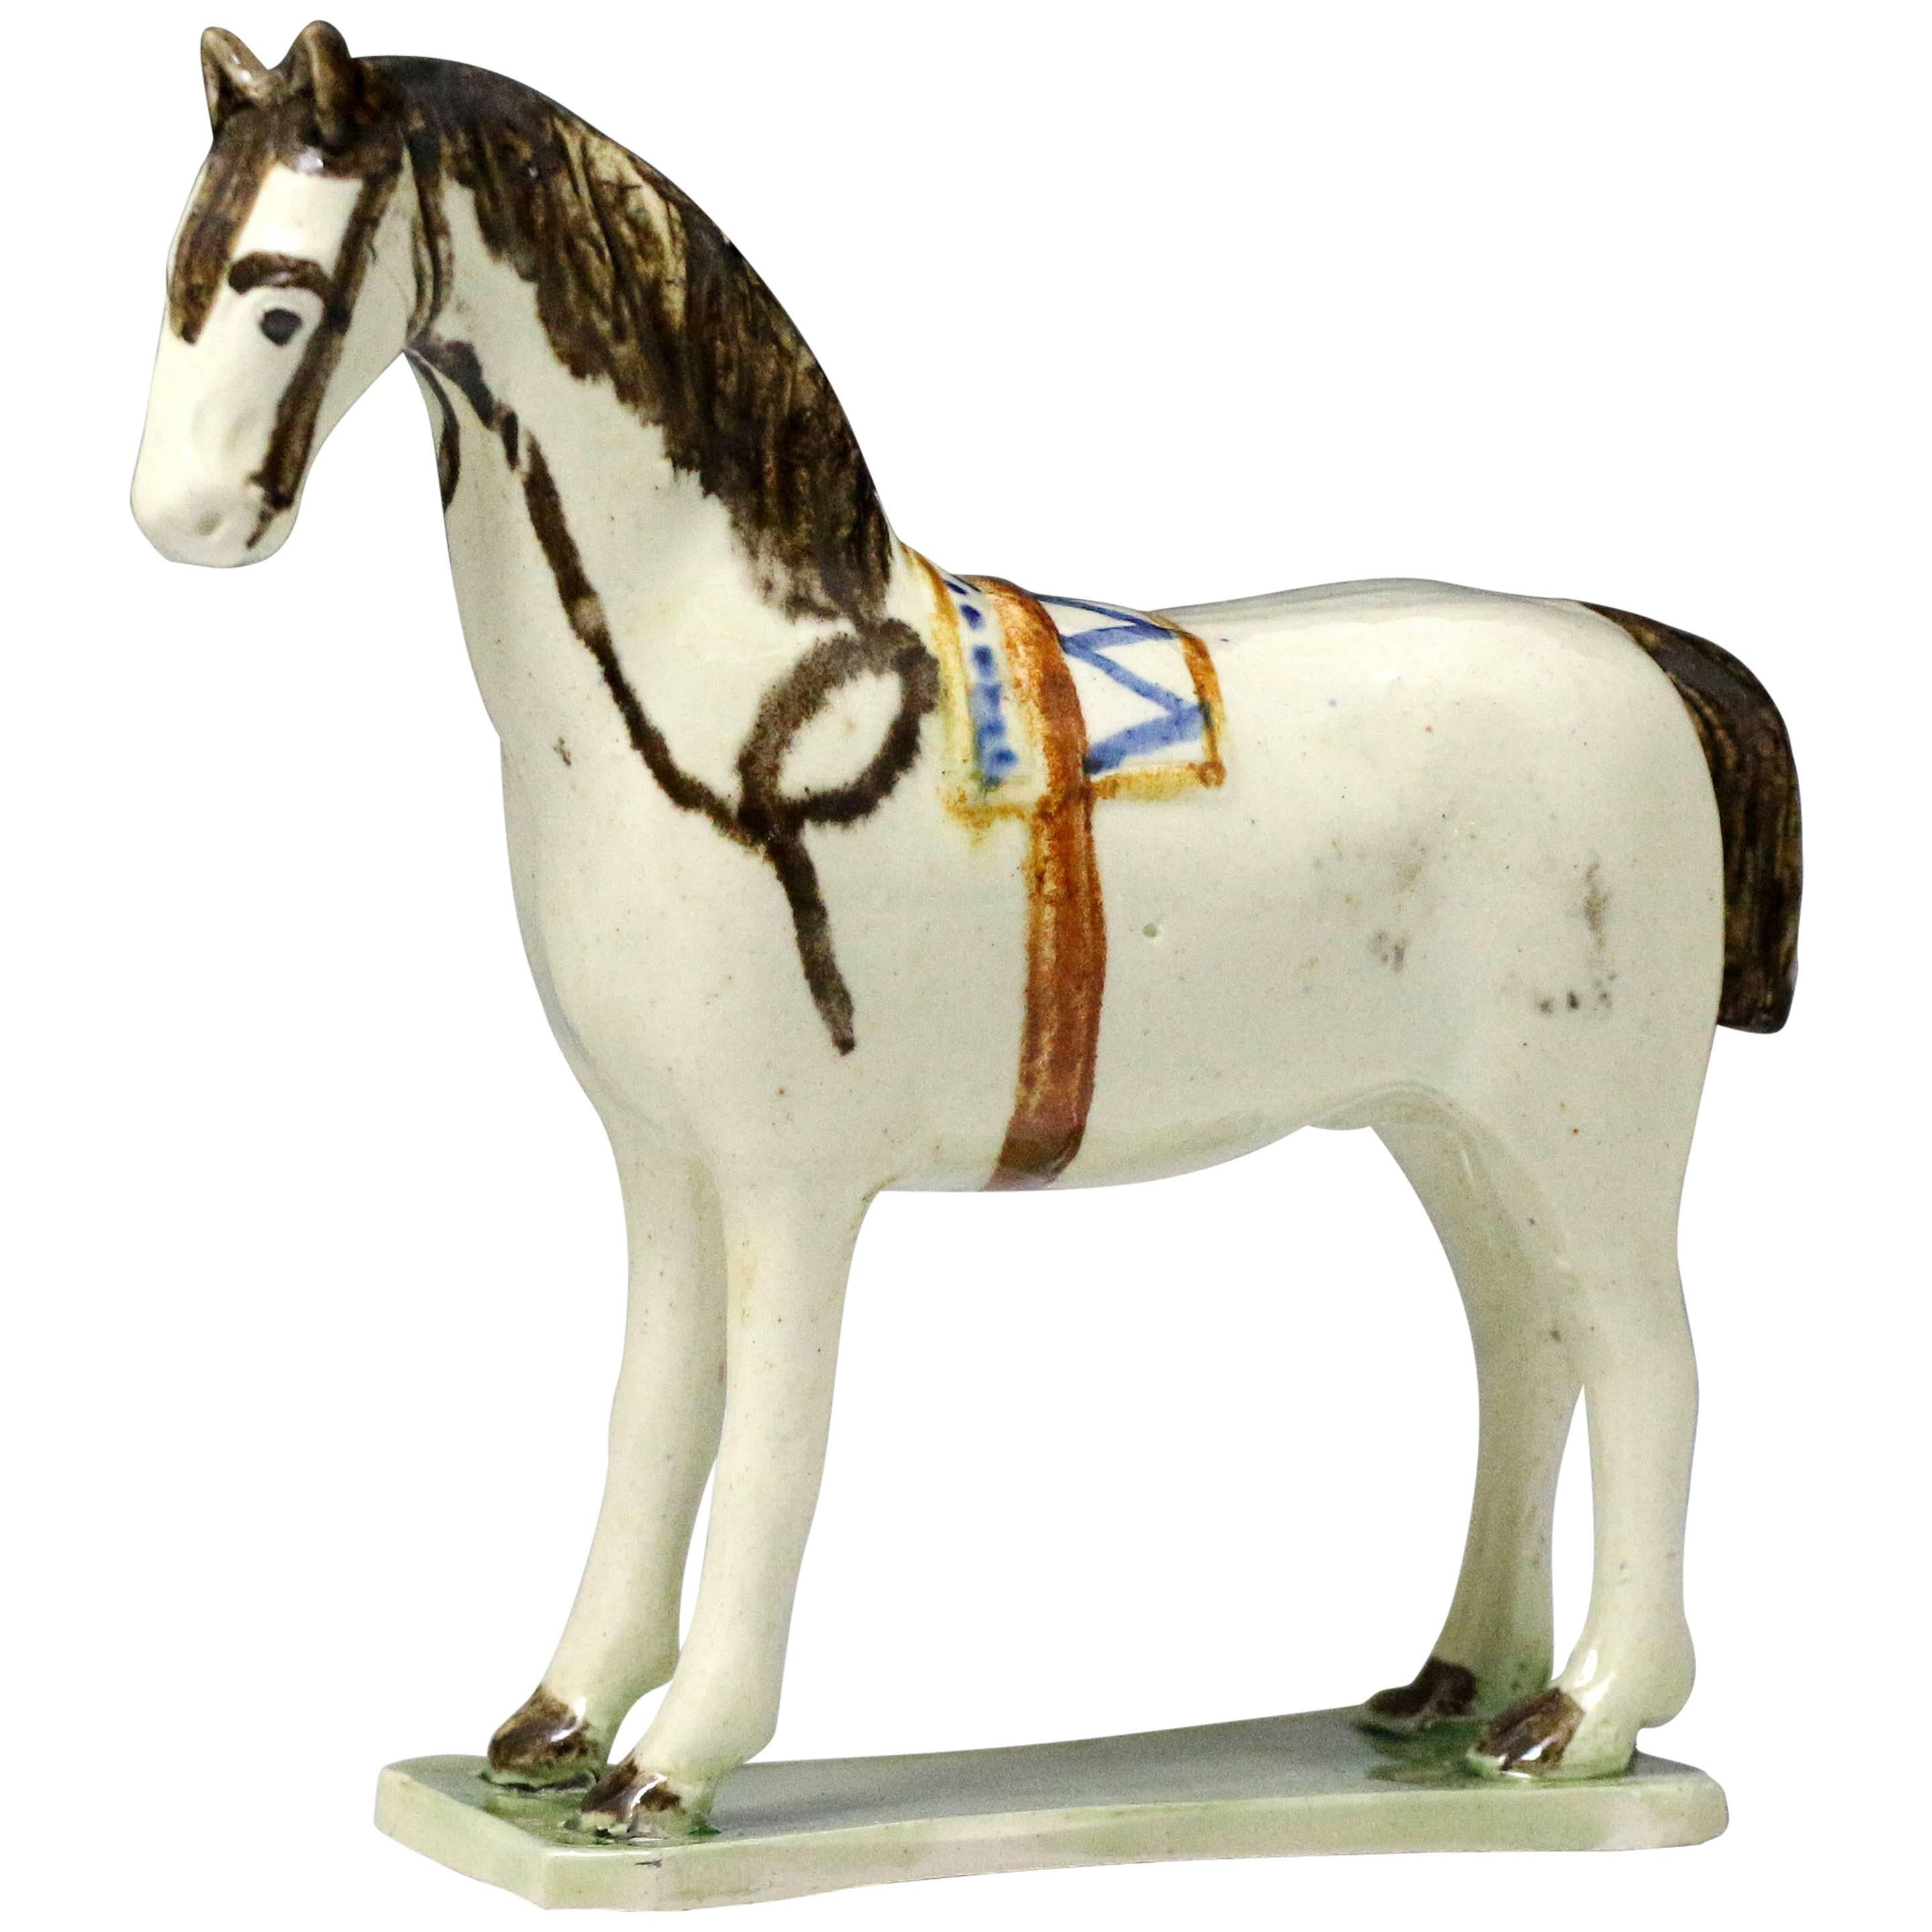 Antique English Pottery Figure of a Horse in Prattware, circa 1800